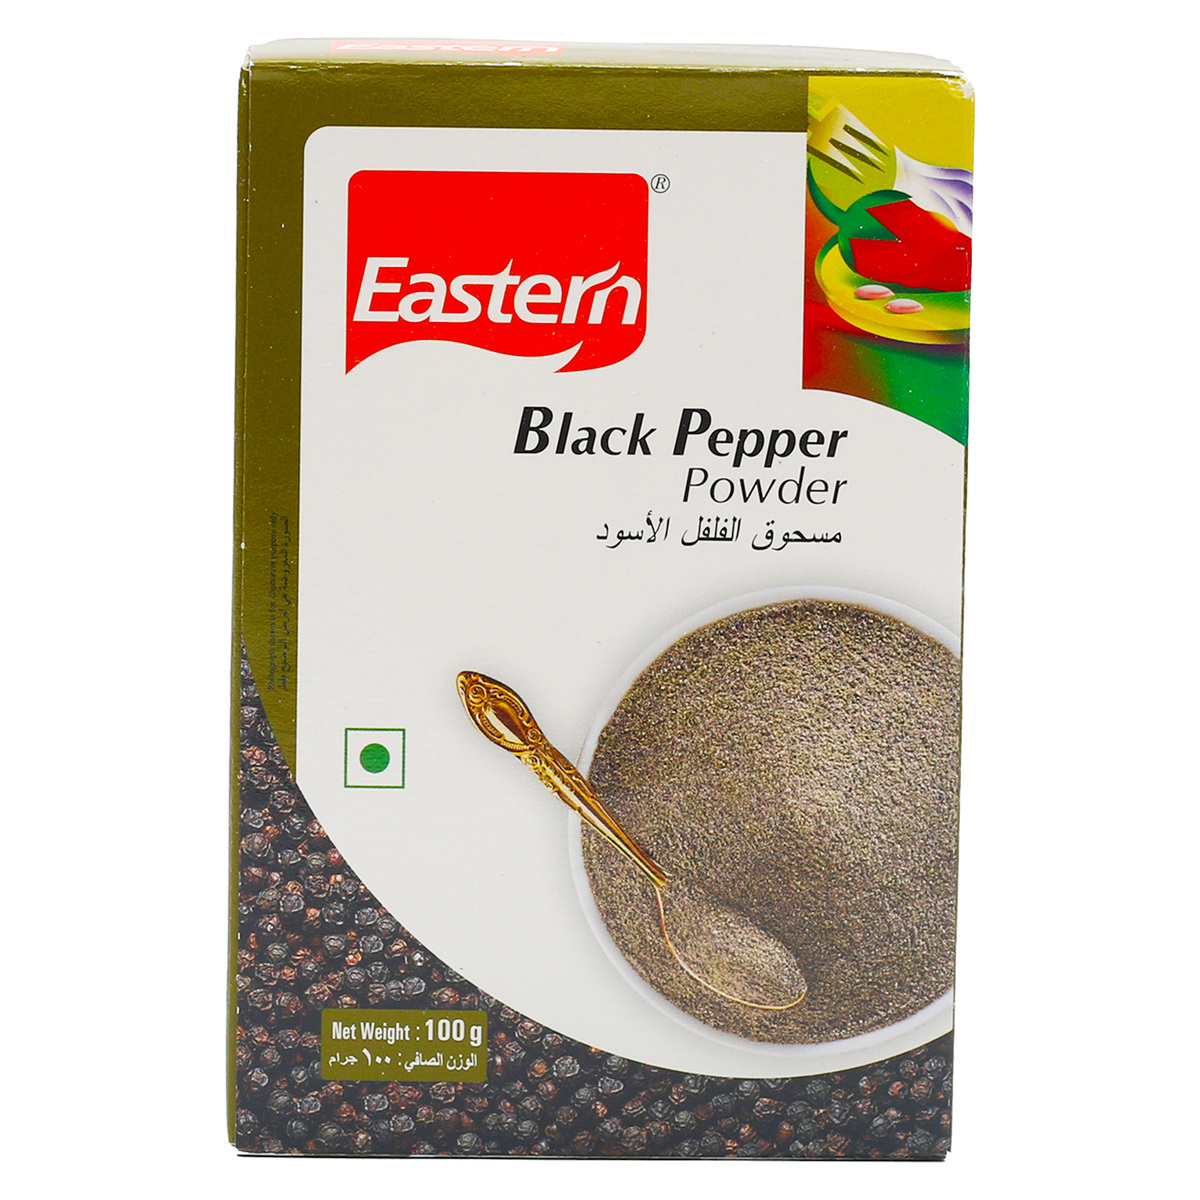 Eastern Black Pepper Powder 100 g